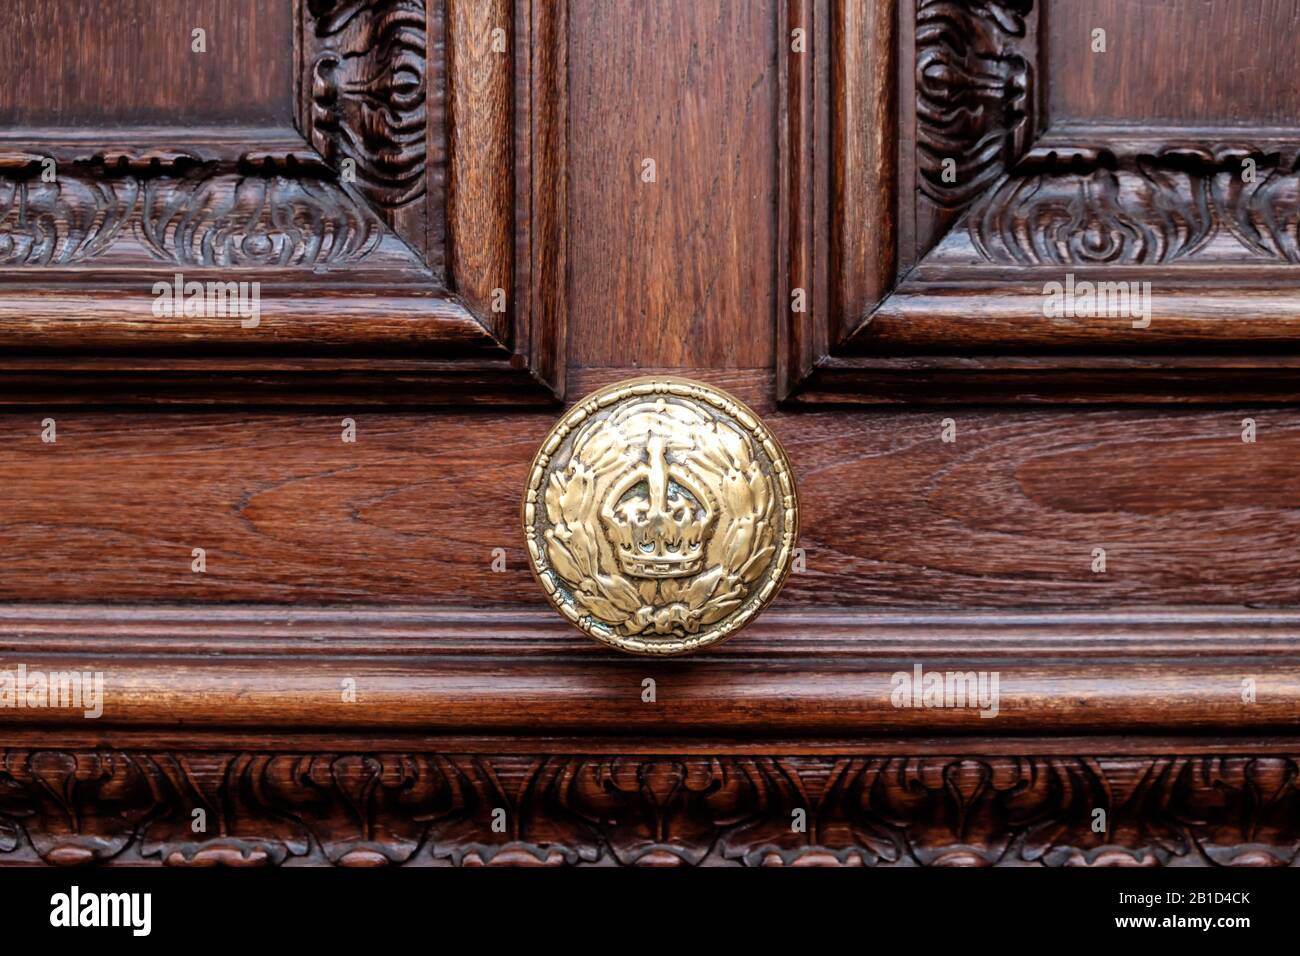 Golden polished door knob with British royal crown symbol engraved Stock Photo